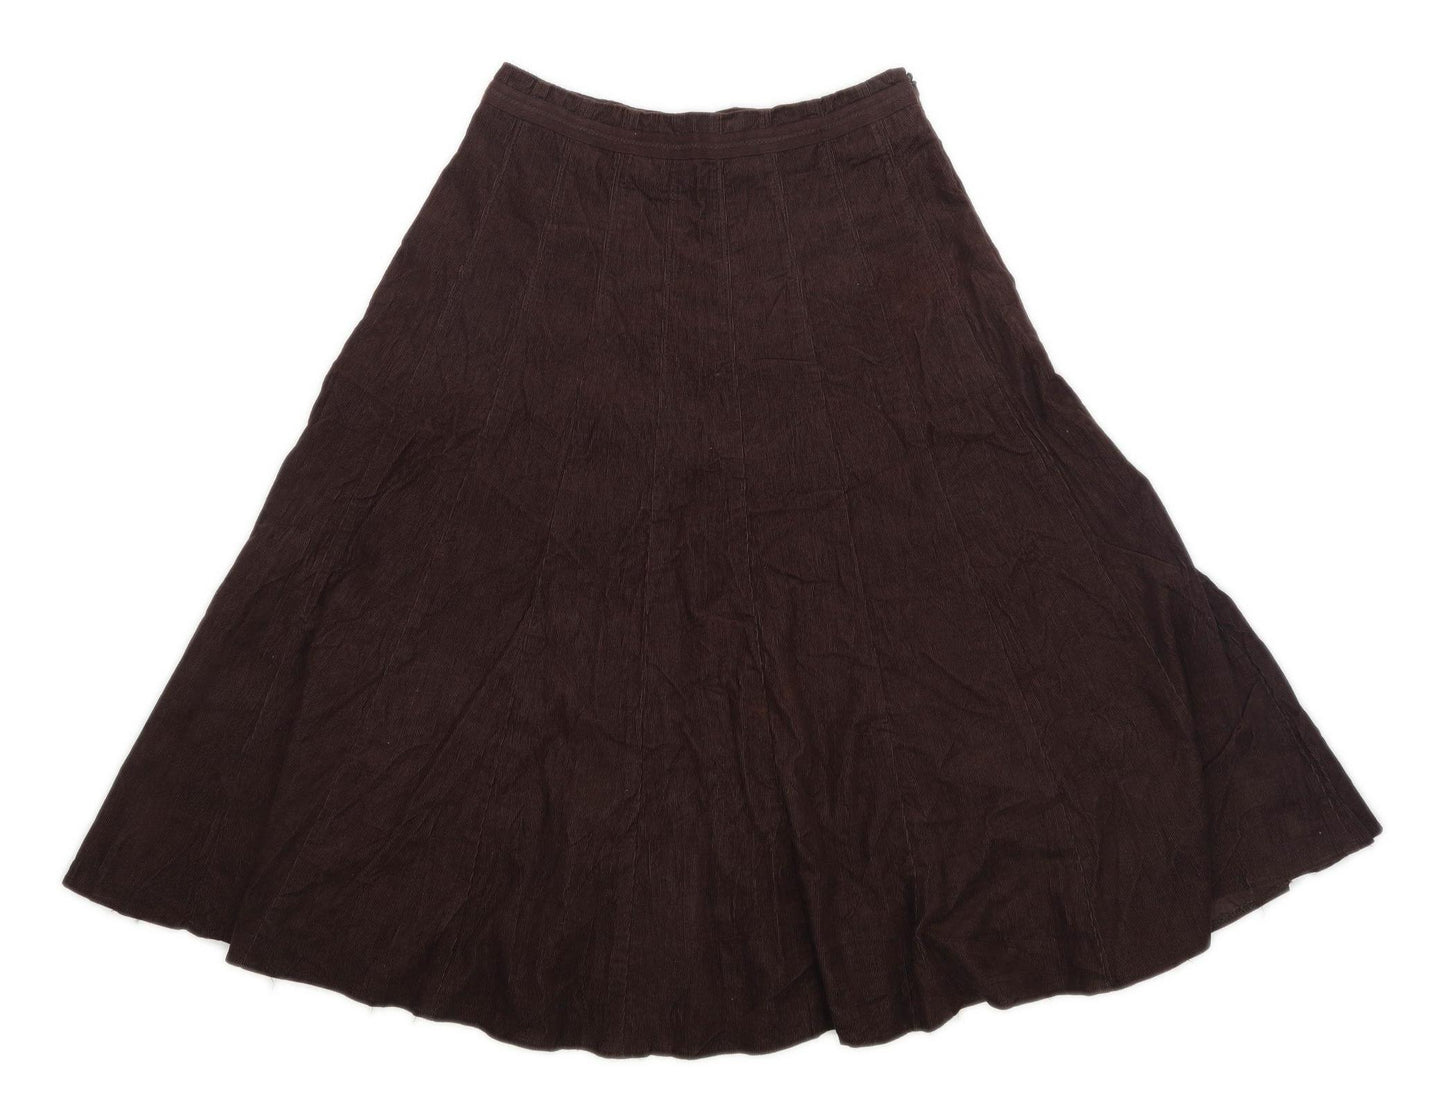 East Womens Size 10 Corduroy Blend Brown Skirt (Regular)